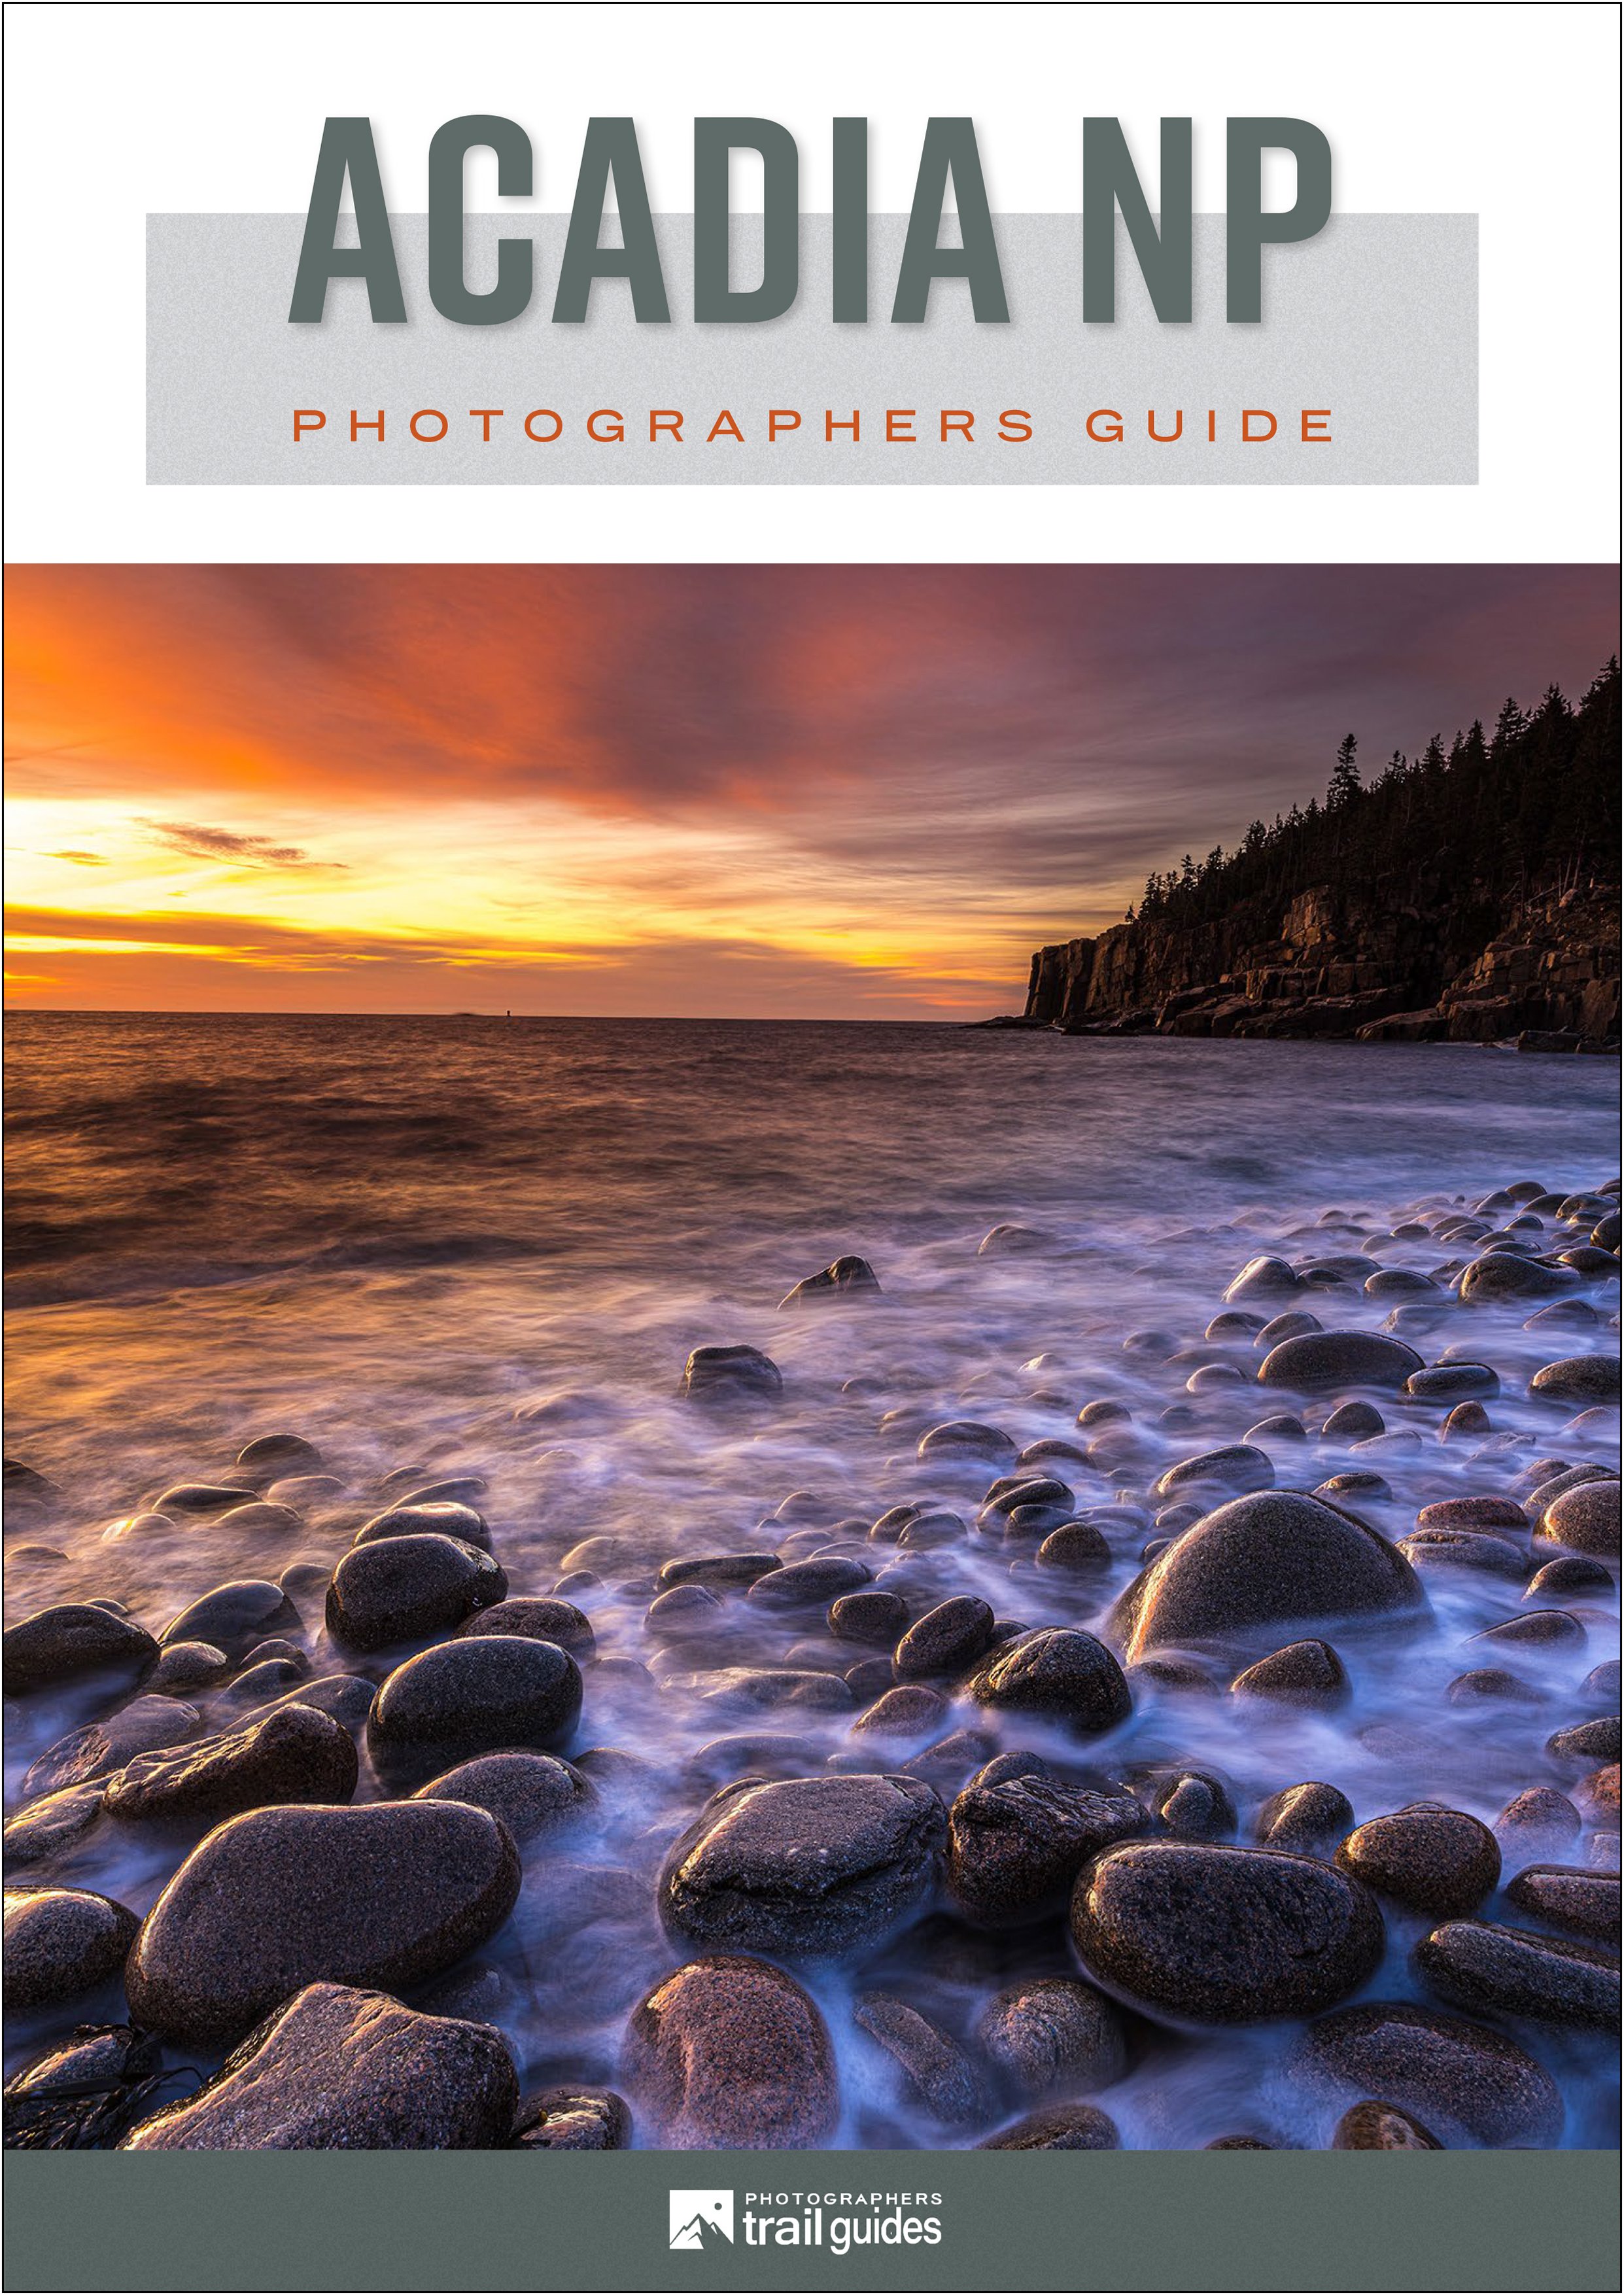 Acadia Photographers Guide.jpg